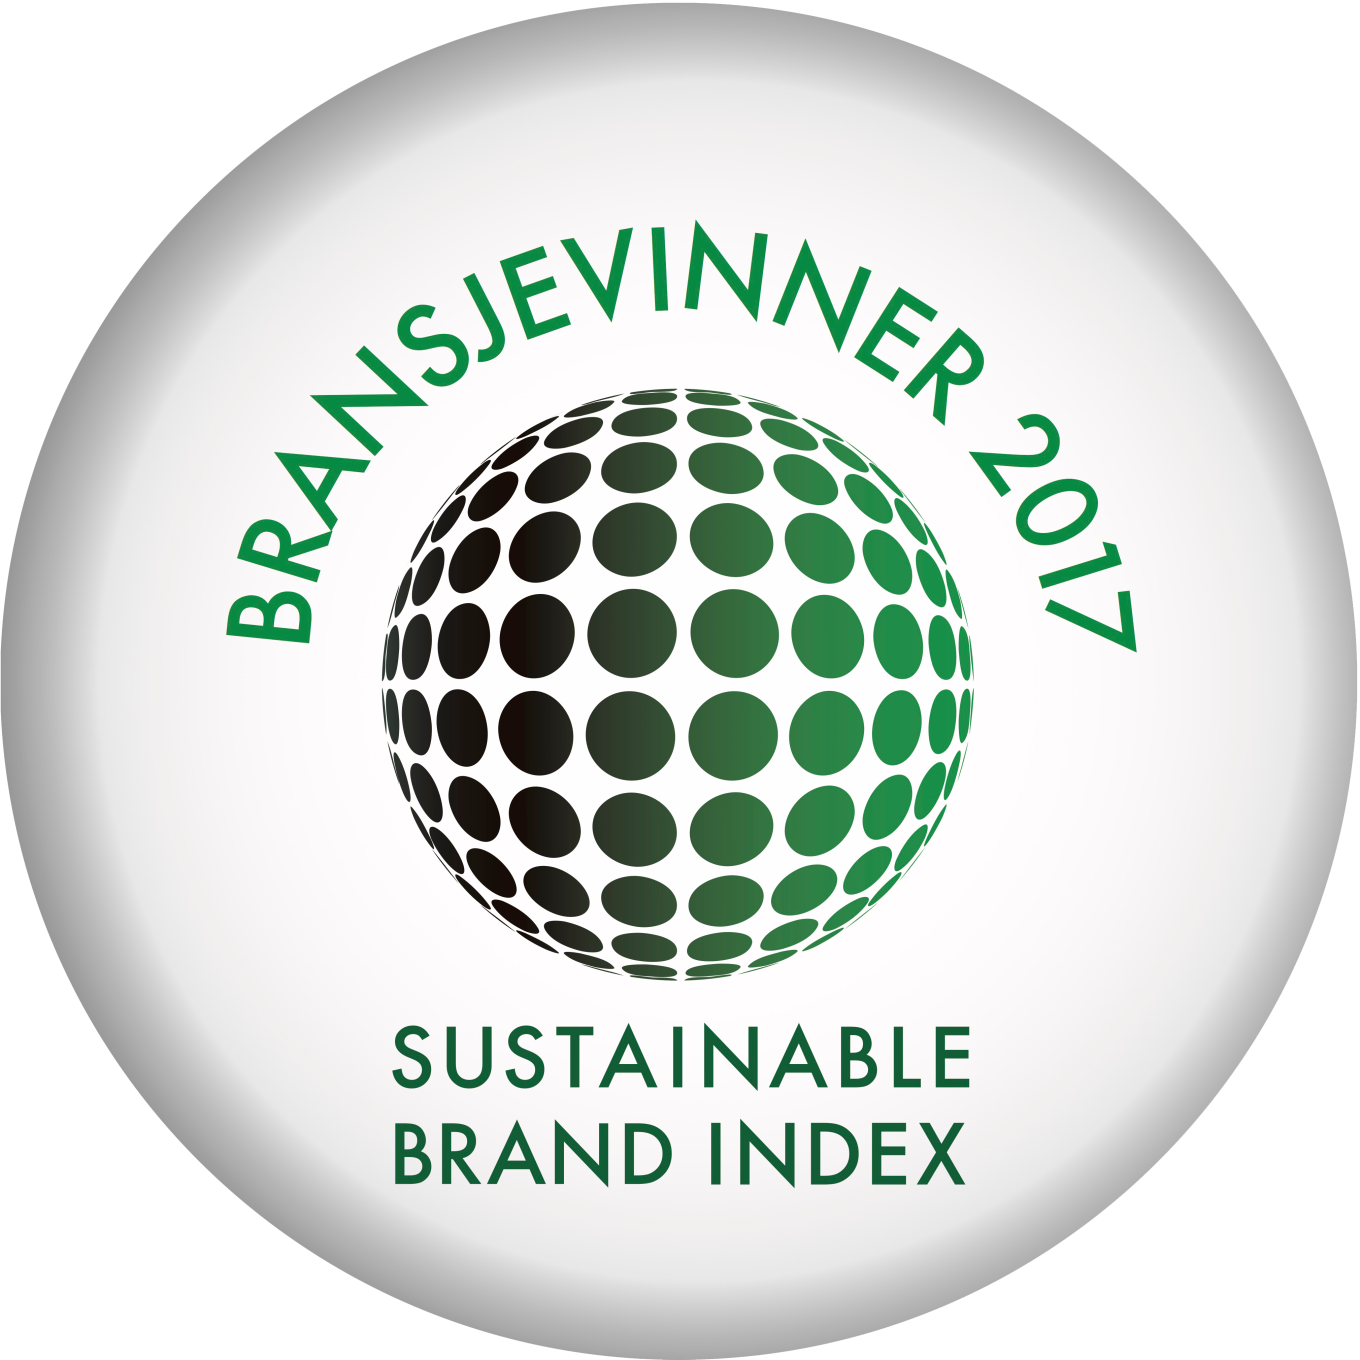 Sustainable Brand Index winner 2017